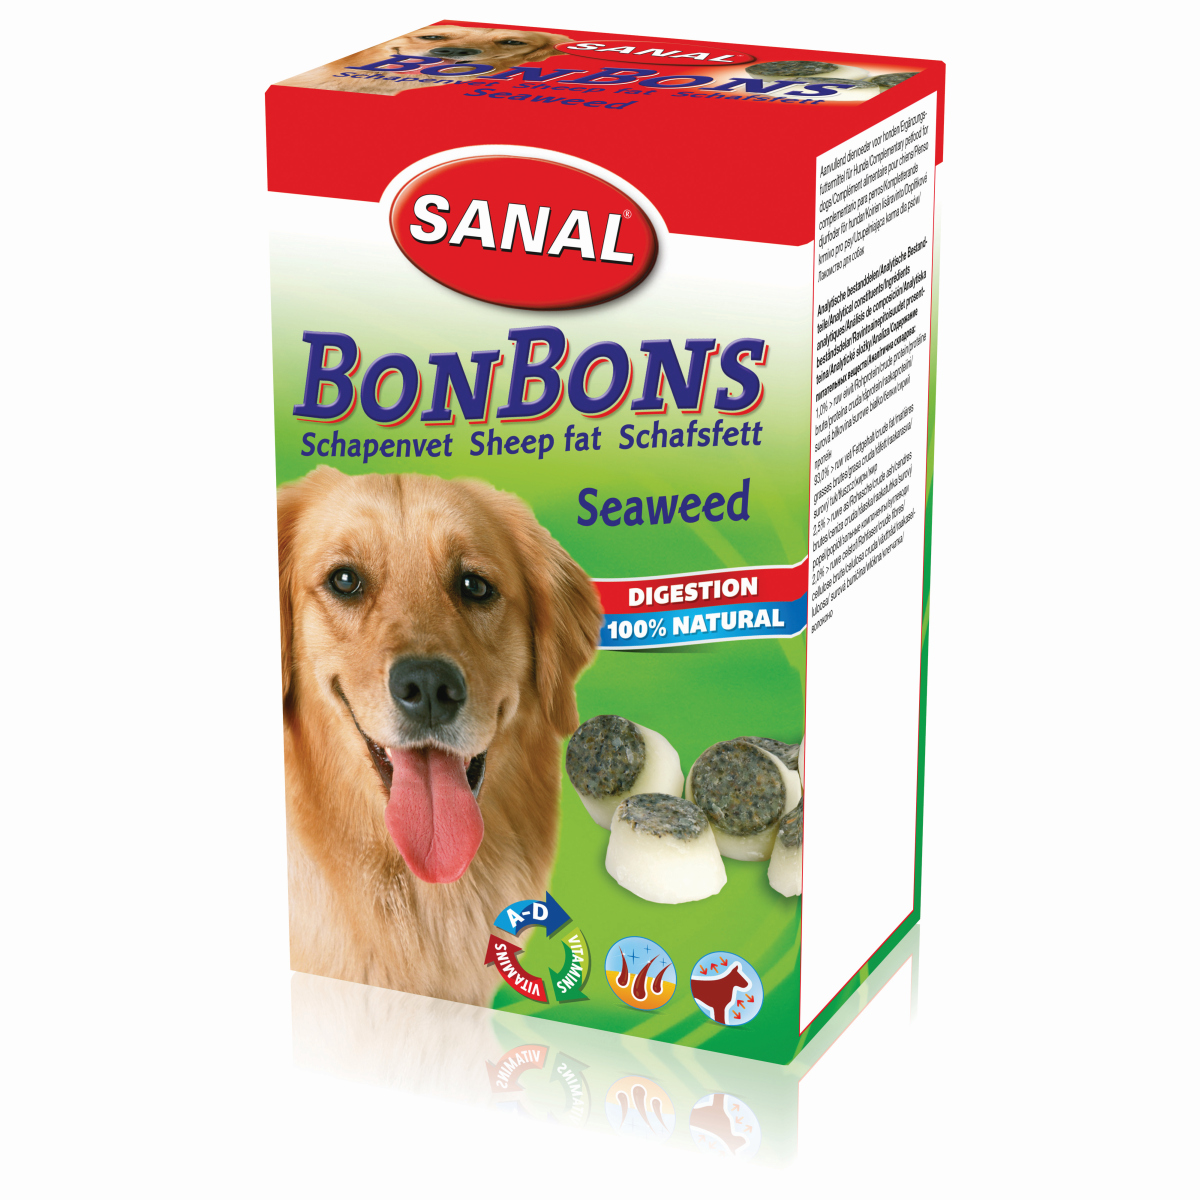 Sanal Sheep Fat Bonbons 150gr. In seaweed or garlic, for a shiny coat.